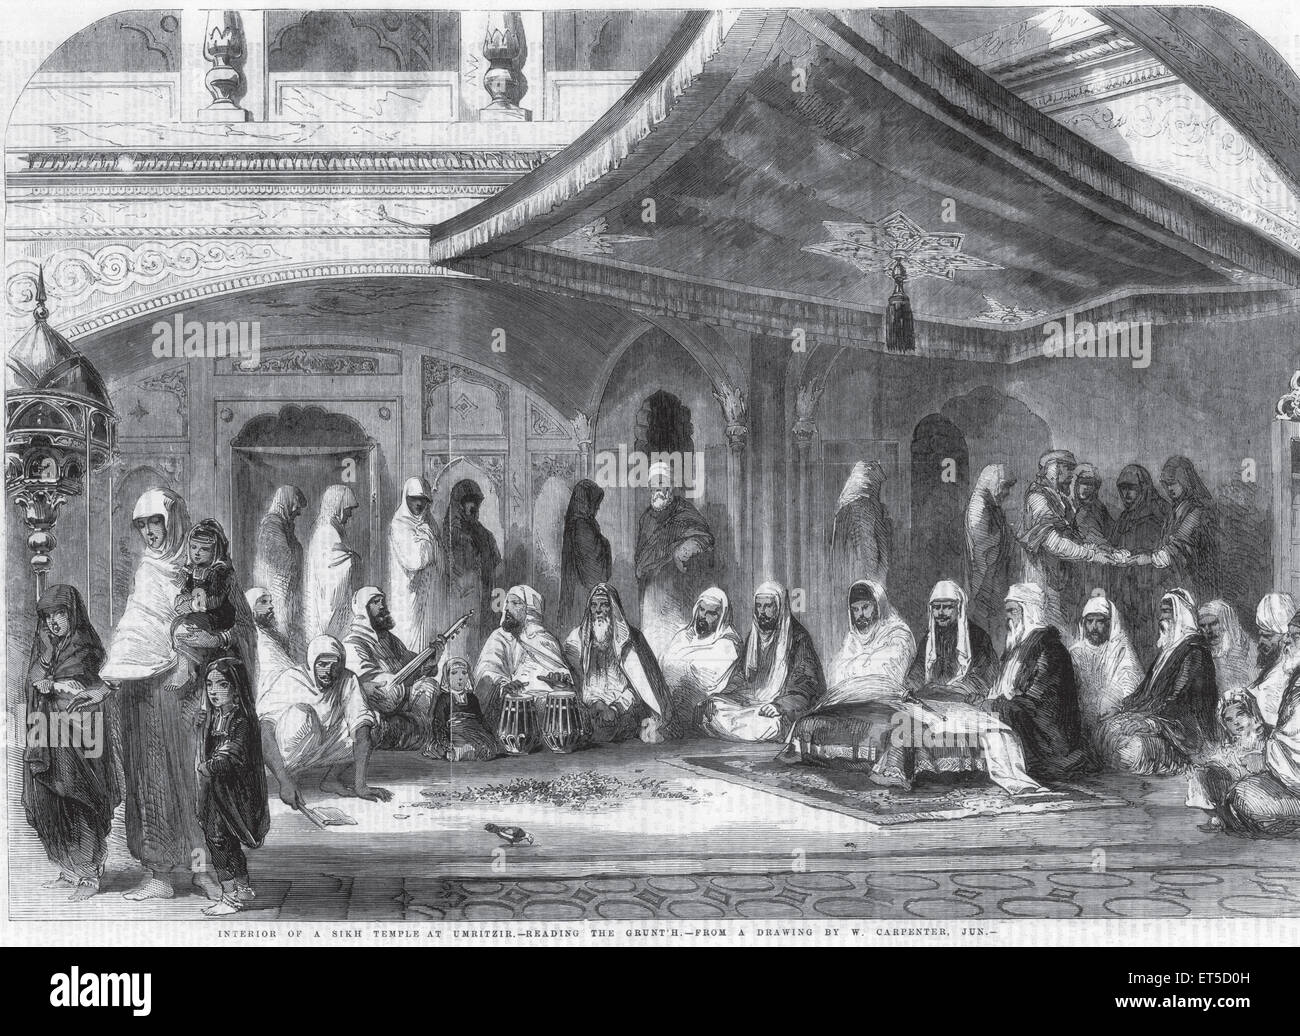 Sikh temple, Golden Temple, reading Guru Granth Sahib, Adi Granth, Guru Arjan, Amritsar, Punjab, India ; old vintage 1800s engraving Stock Photo